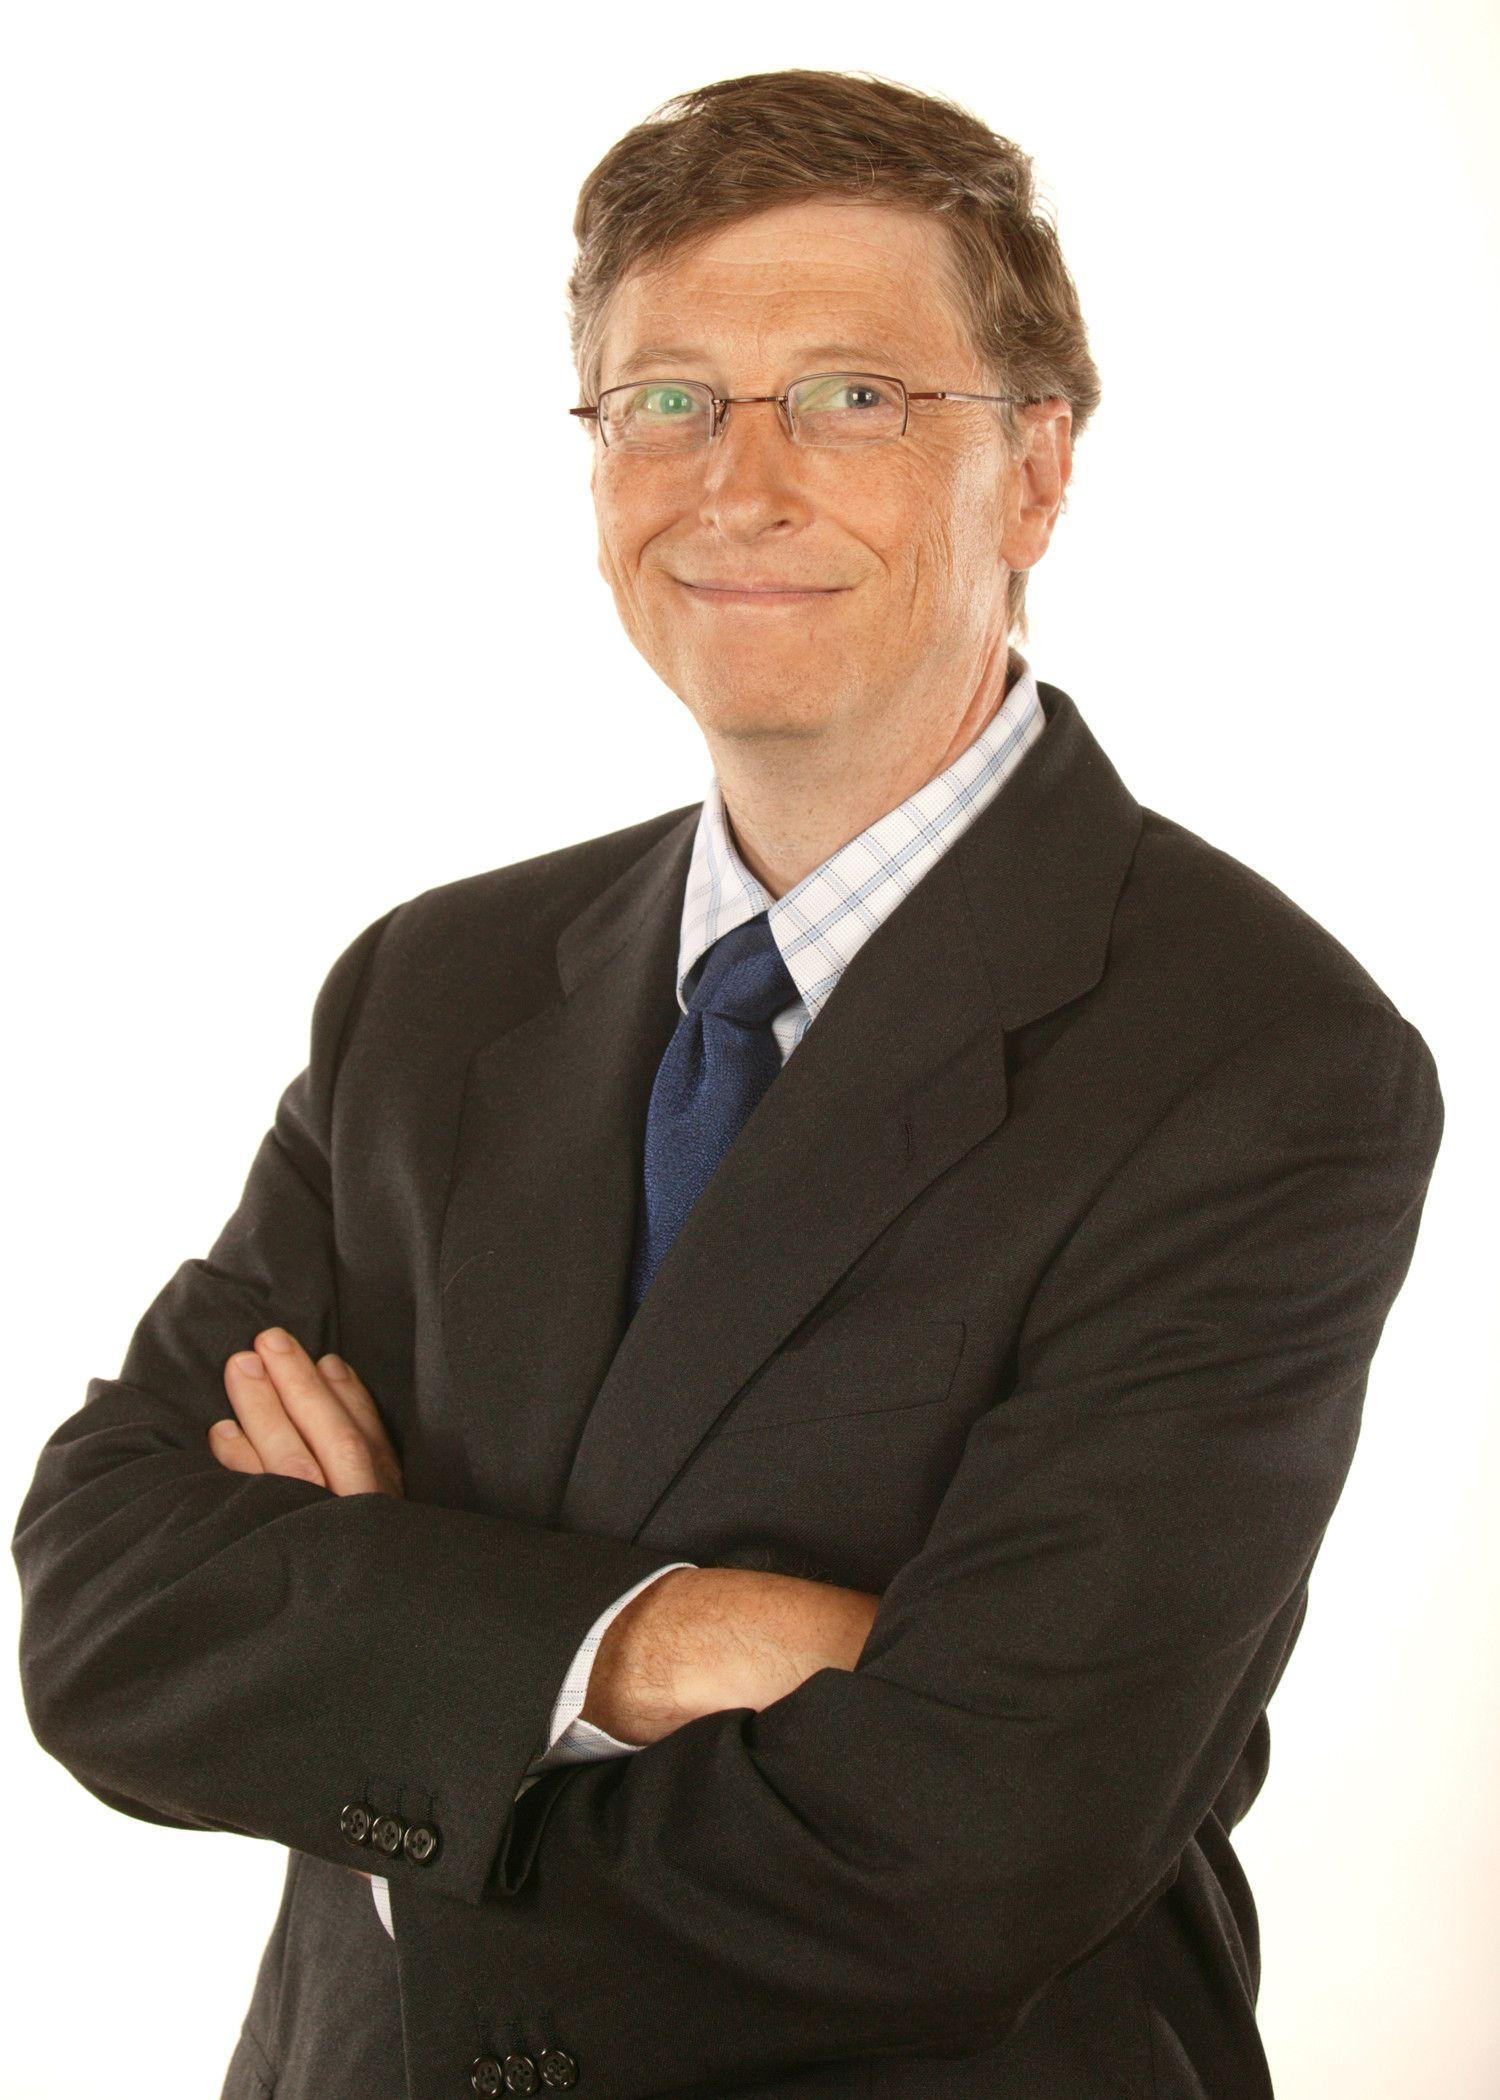 Bill Gates star photo